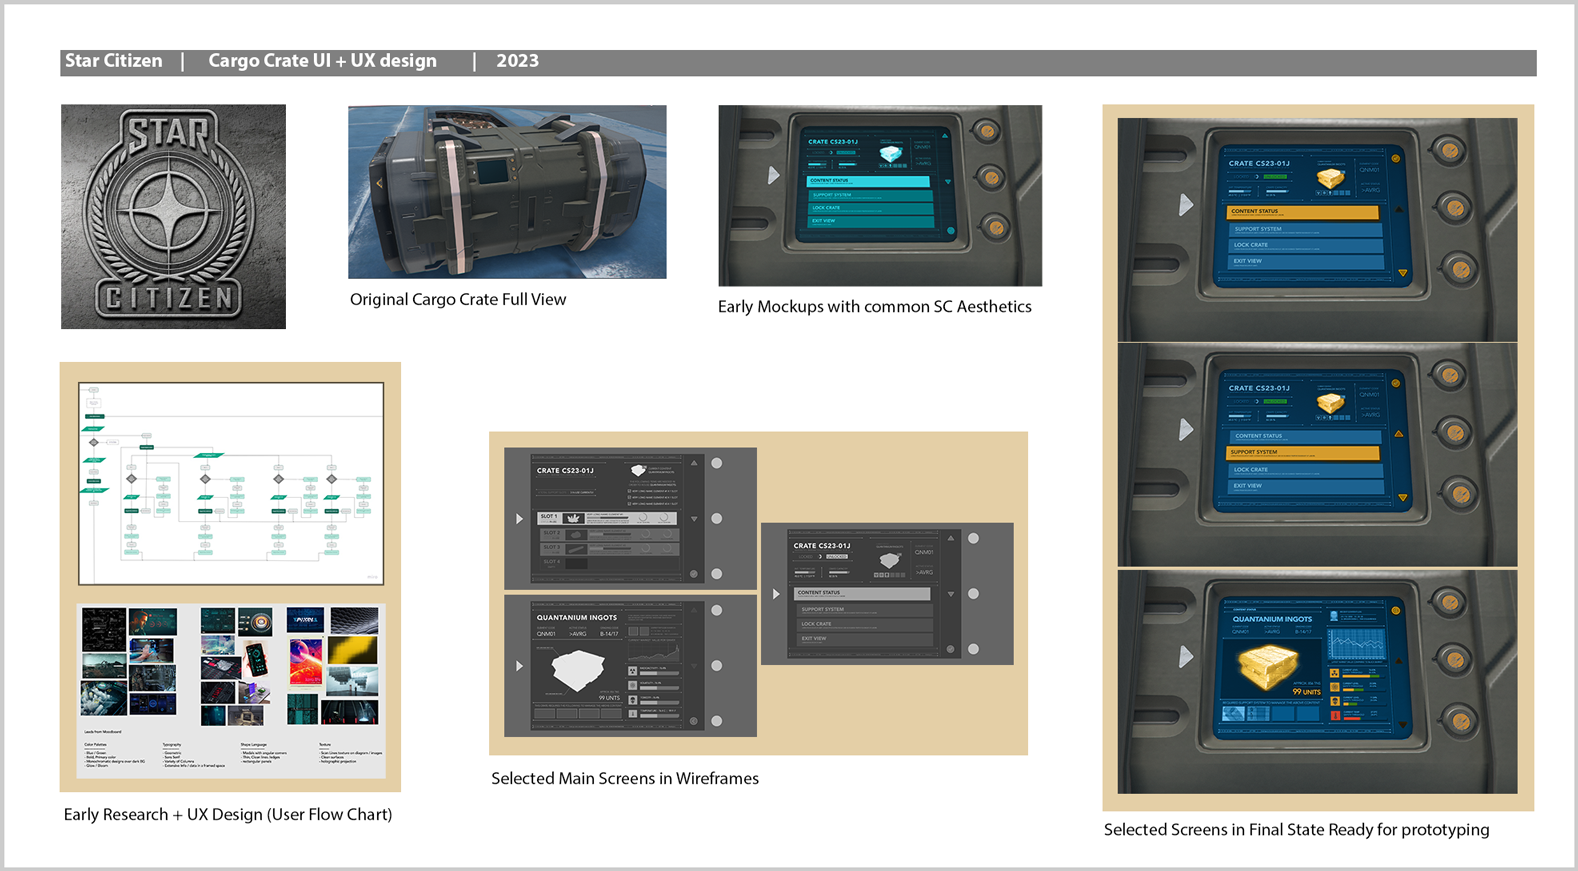 Star Citizen - Cargo Crate Terminal - UI + UX Design